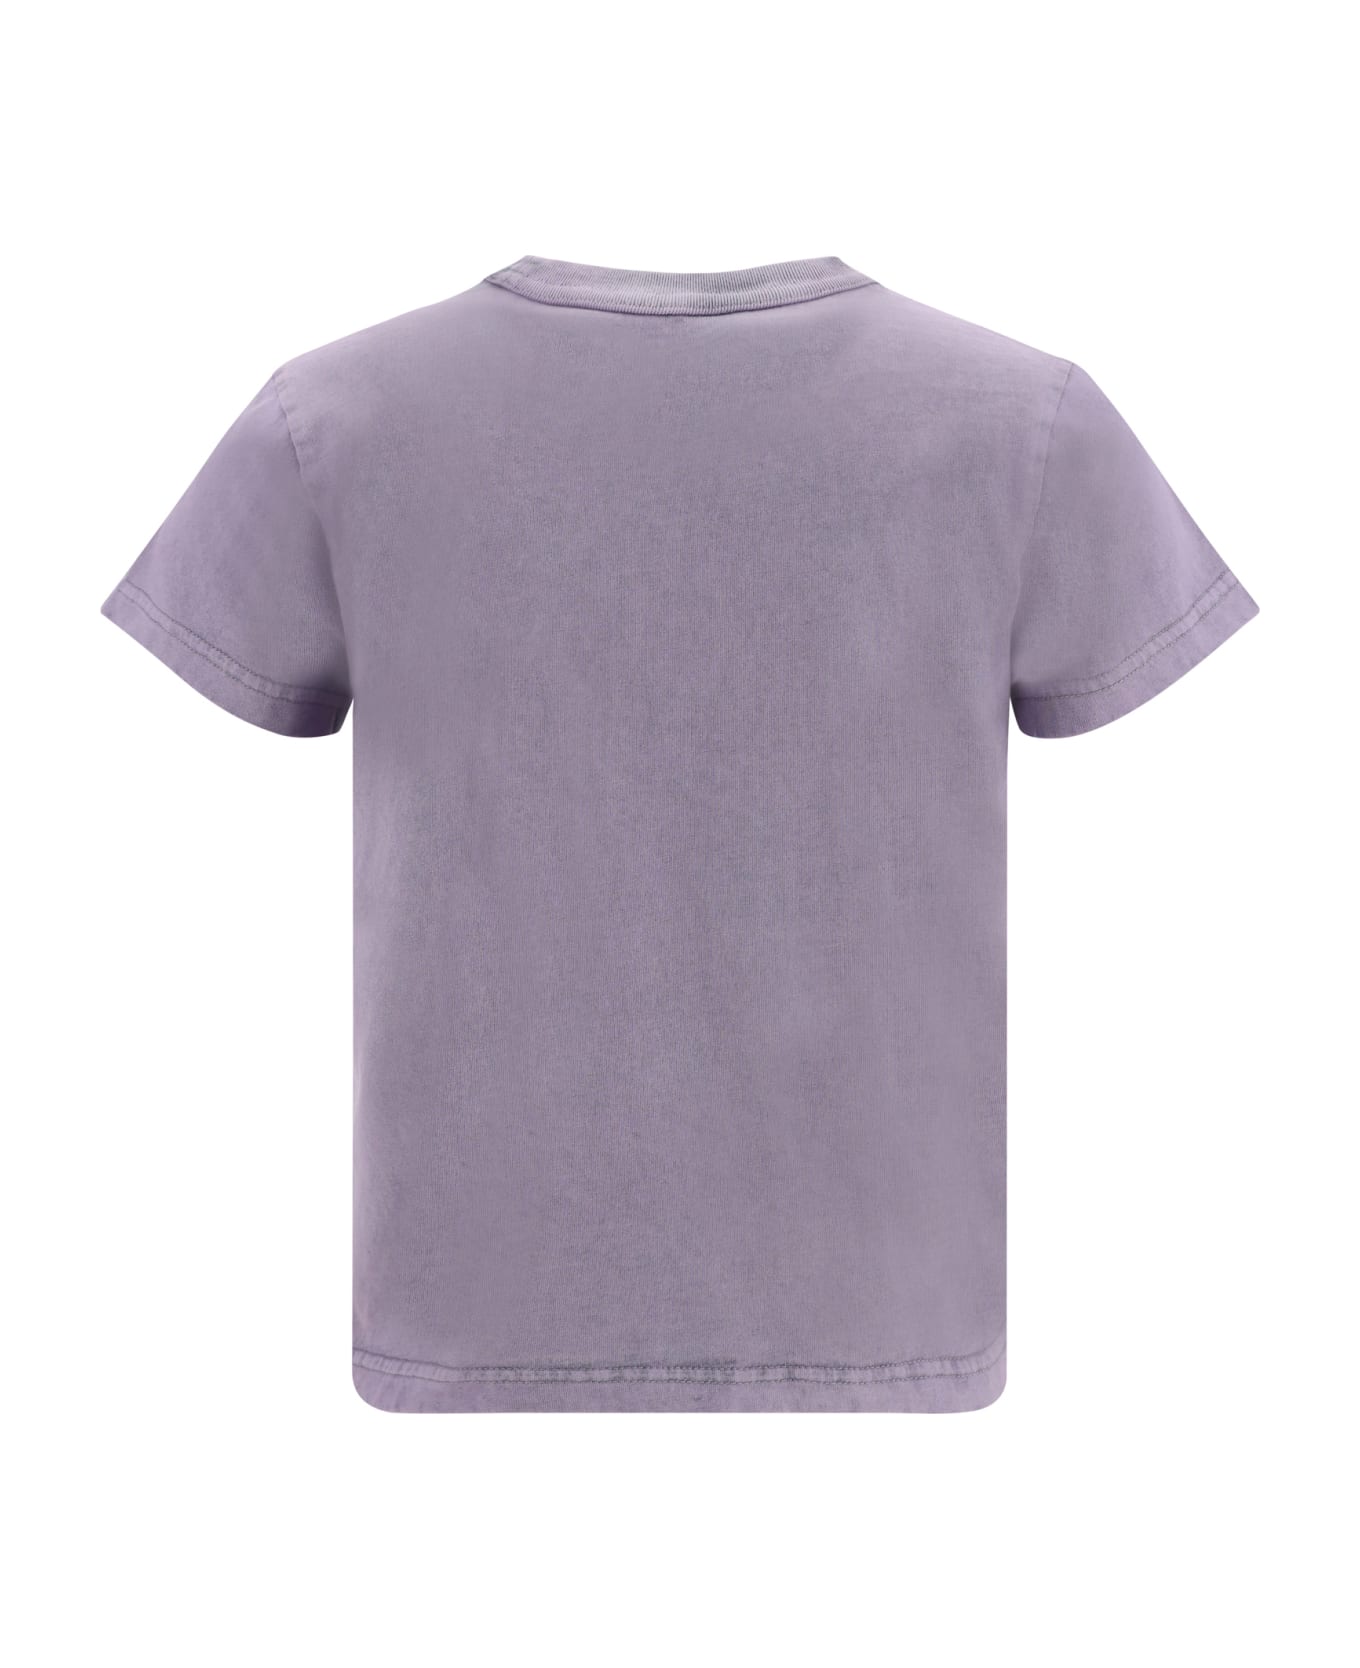 Alexander Wang T-shirt - A Acid Pink Lavender